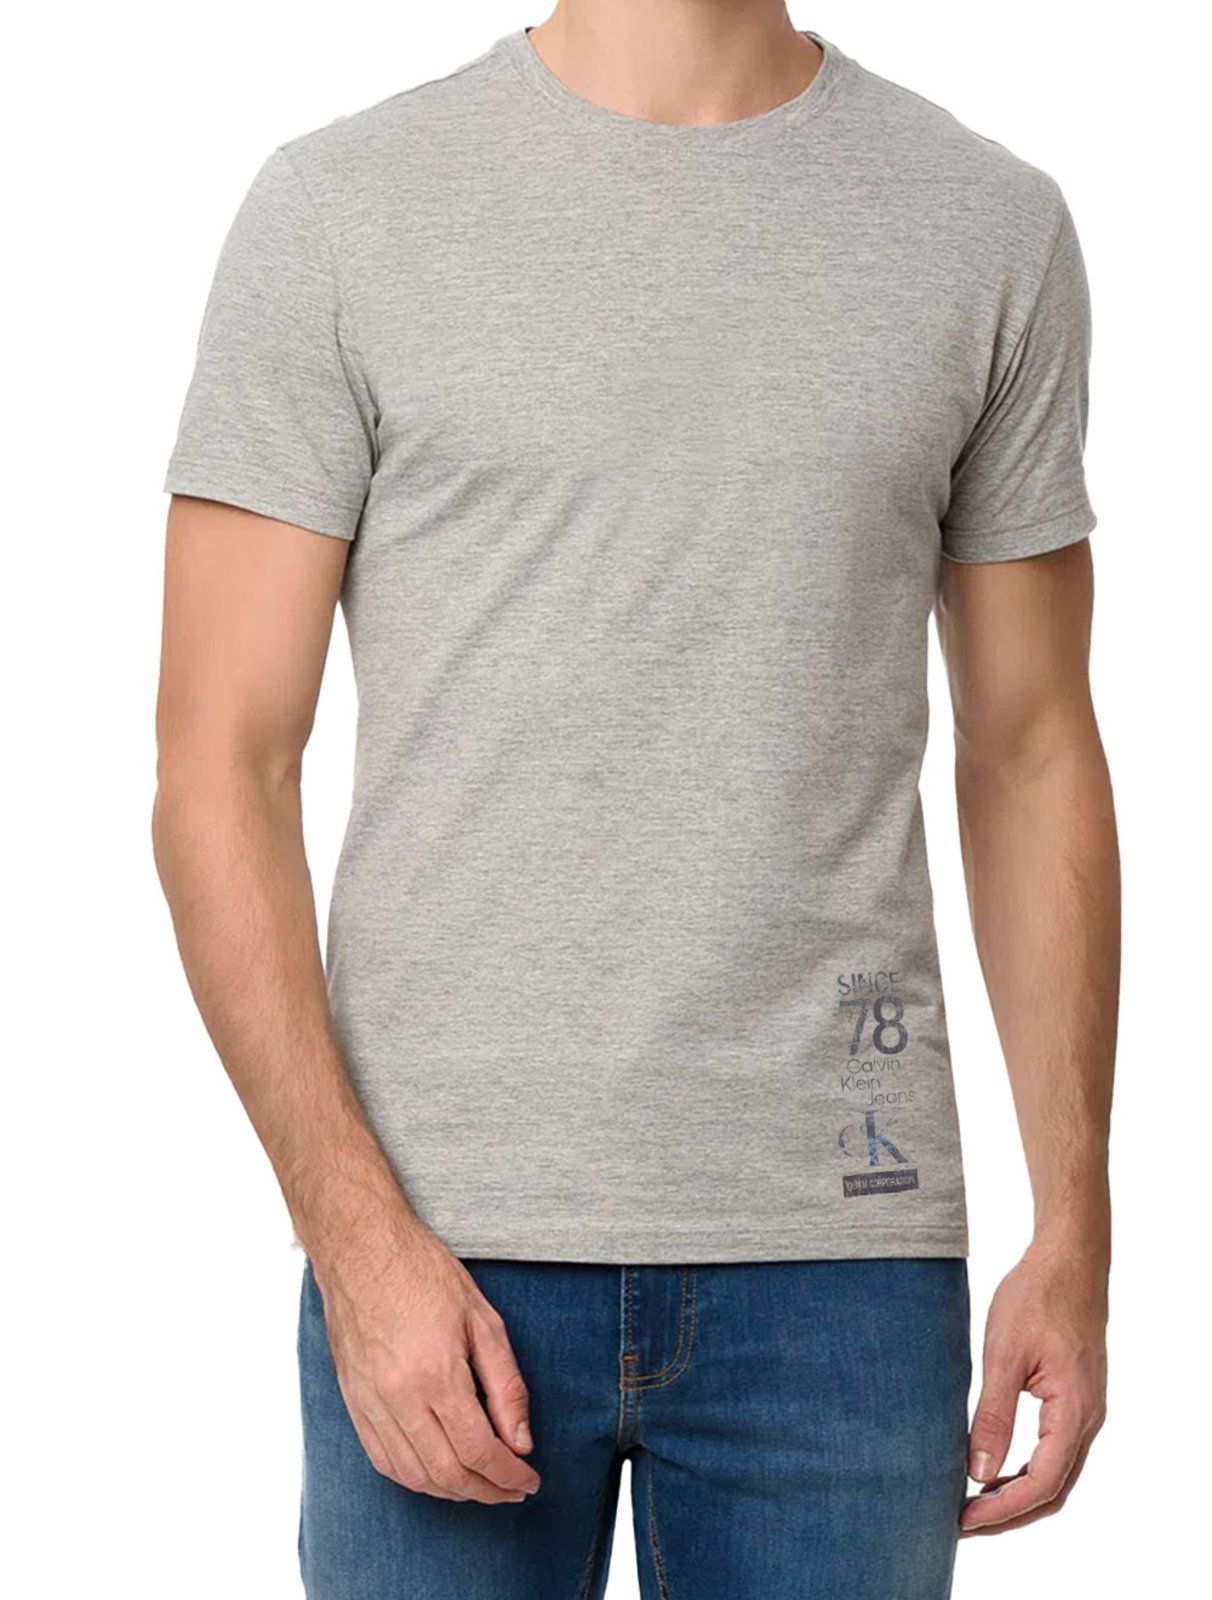 Camiseta Calvin Klein Algodão Mescla